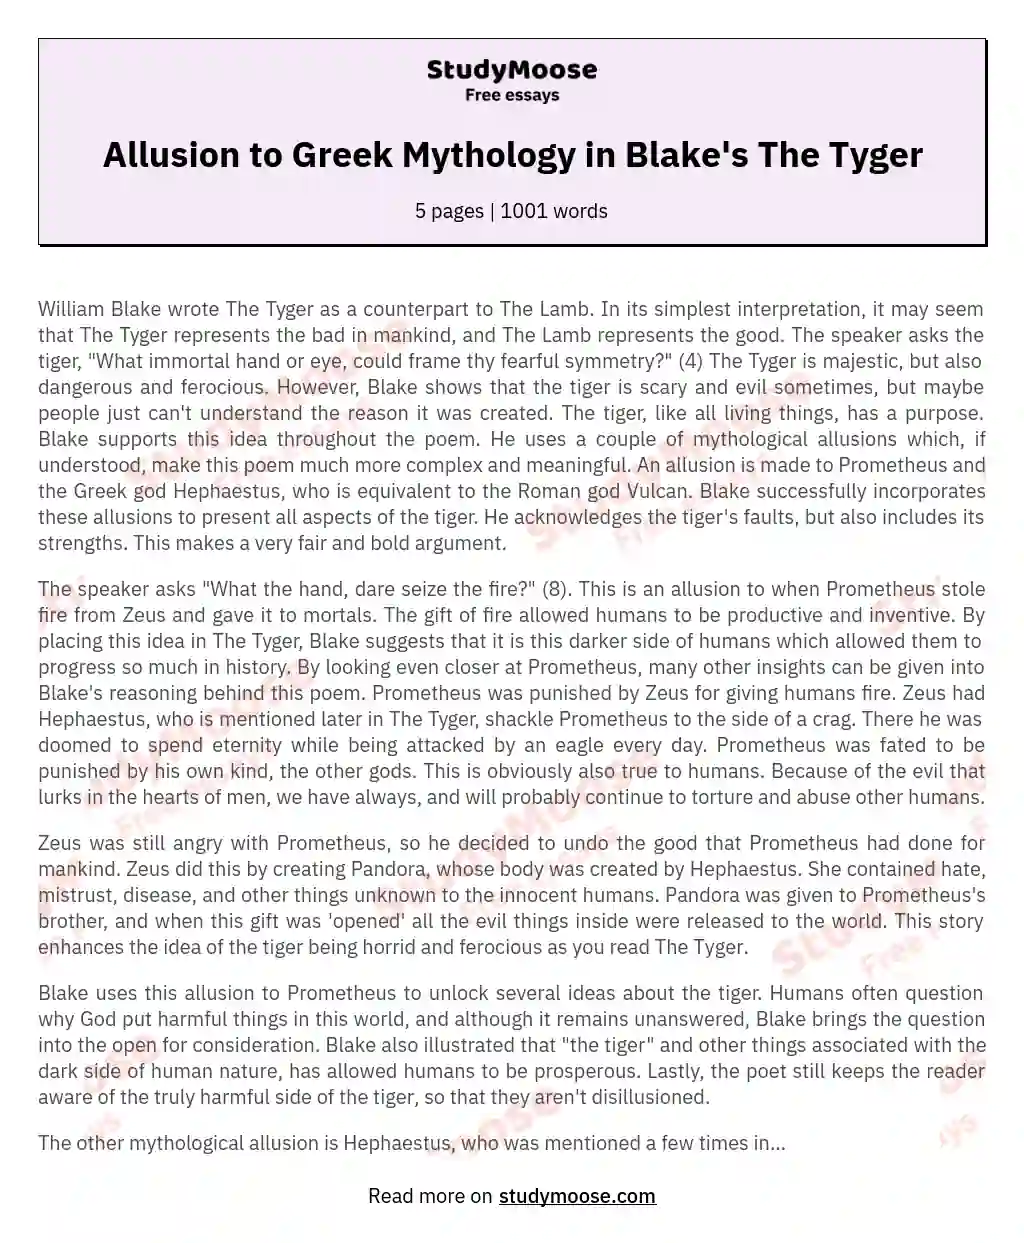 Allusion to Greek Mythology in Blake's The Tyger essay